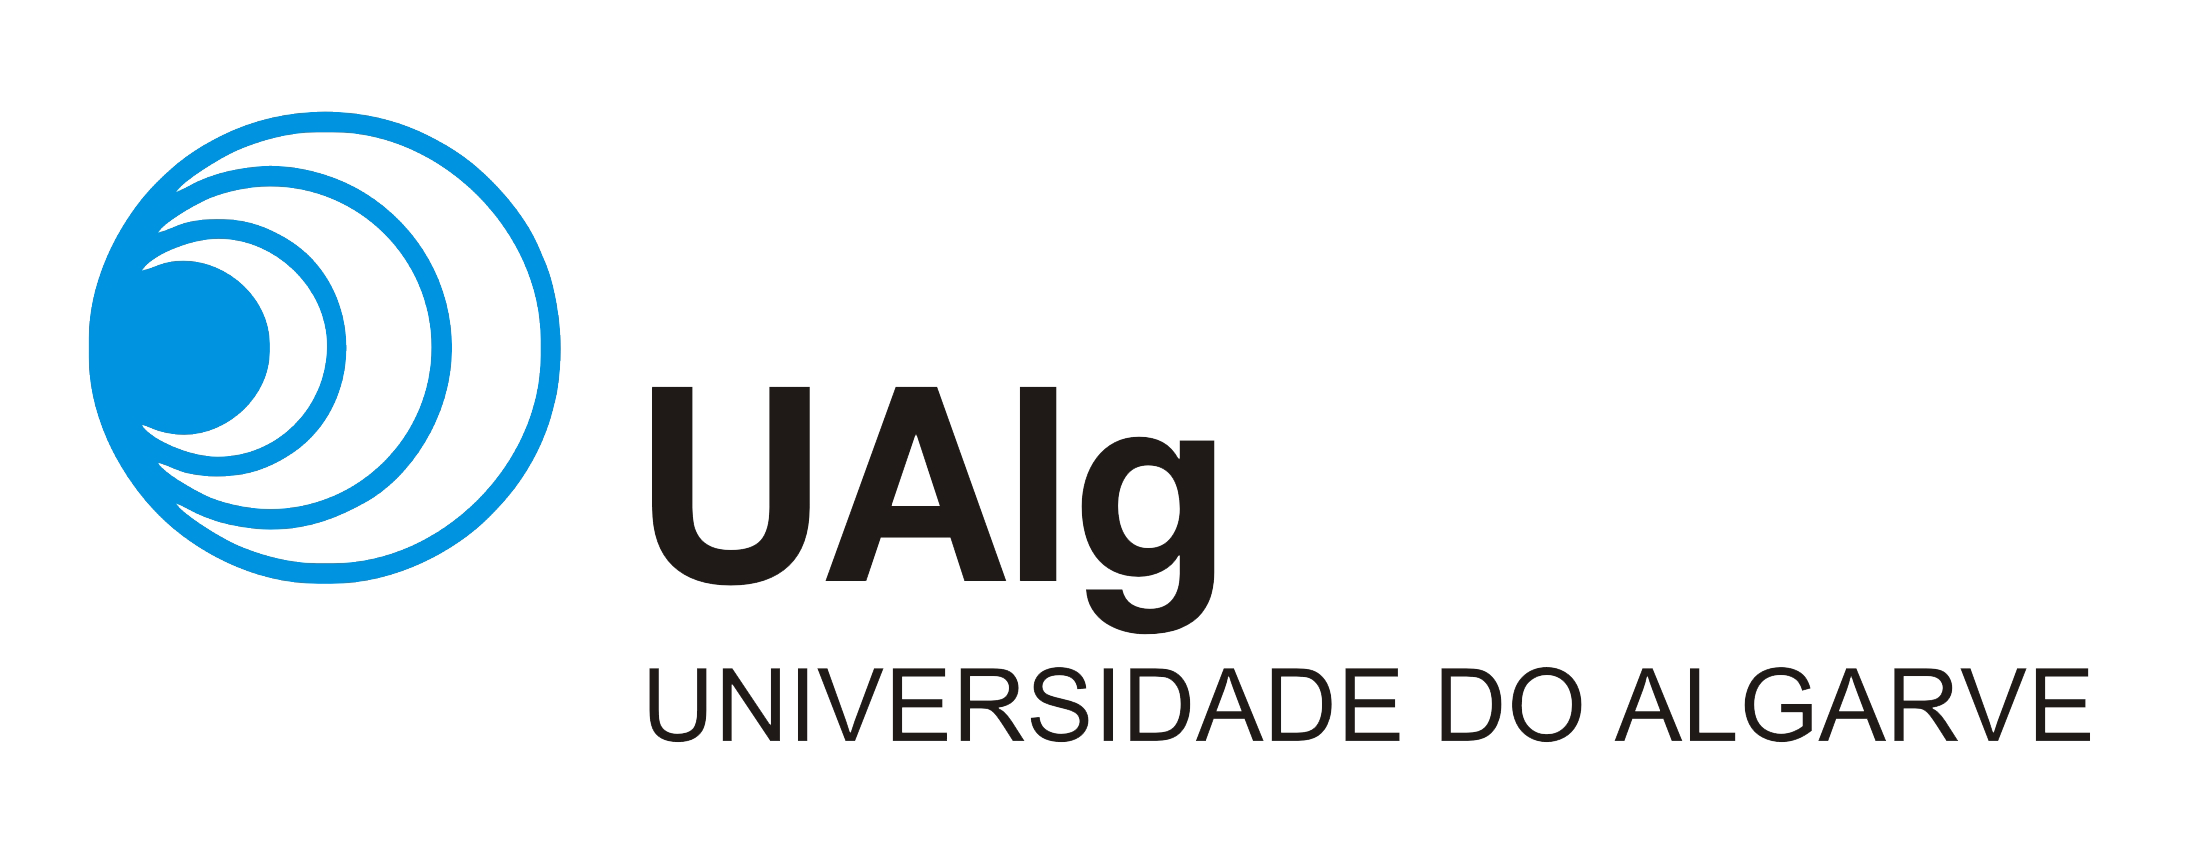 University of the Algarve Logo